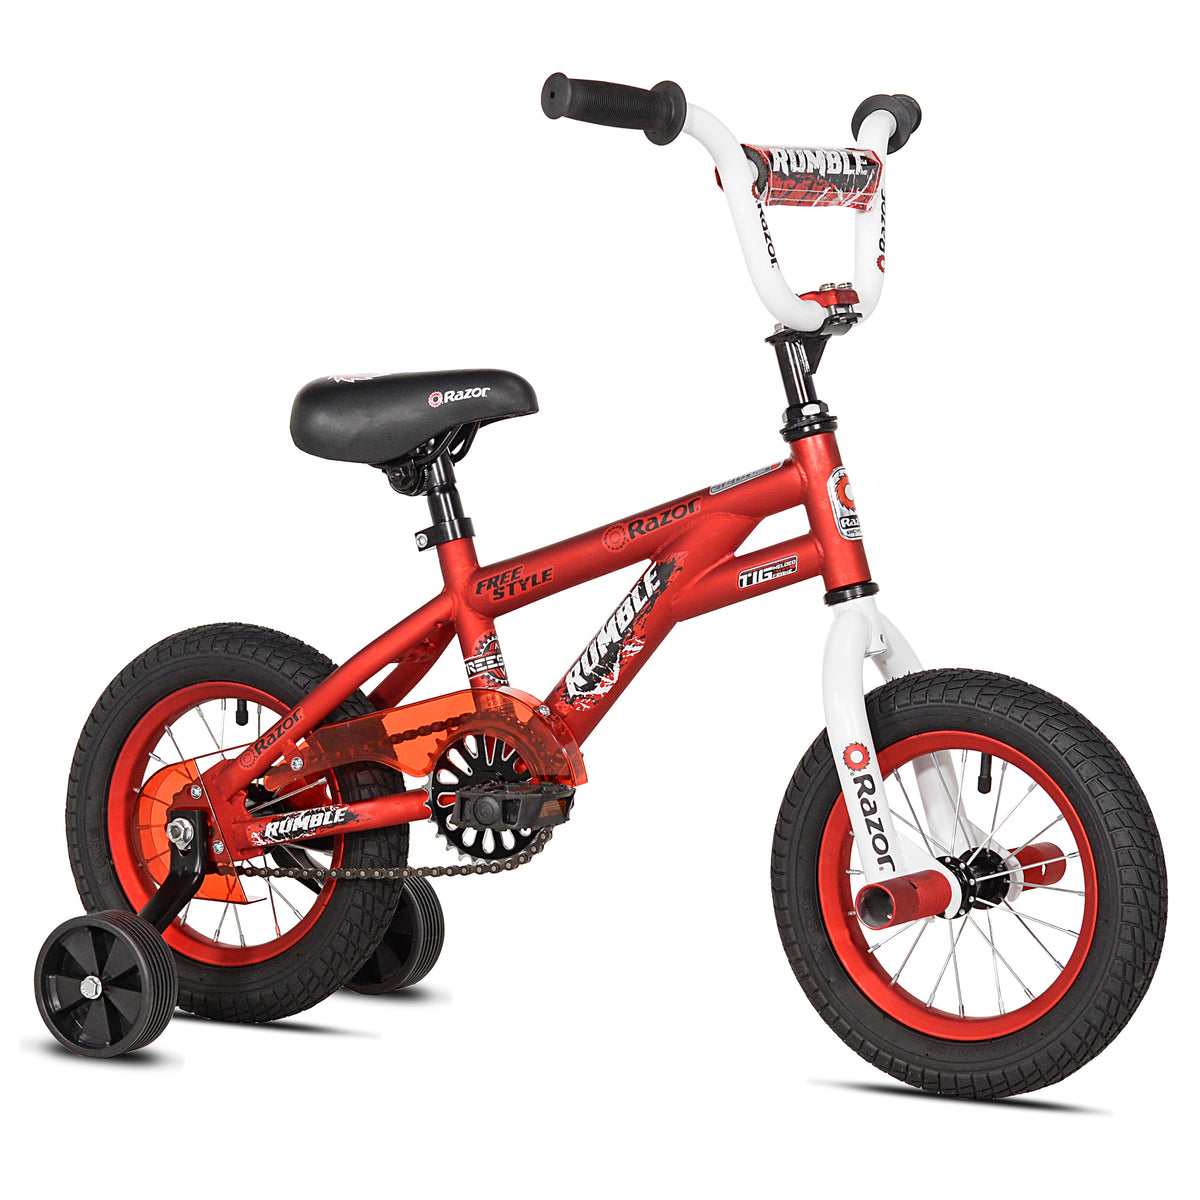 12" Razor® Rumble | BMX Bike for Kids Ages 2-4